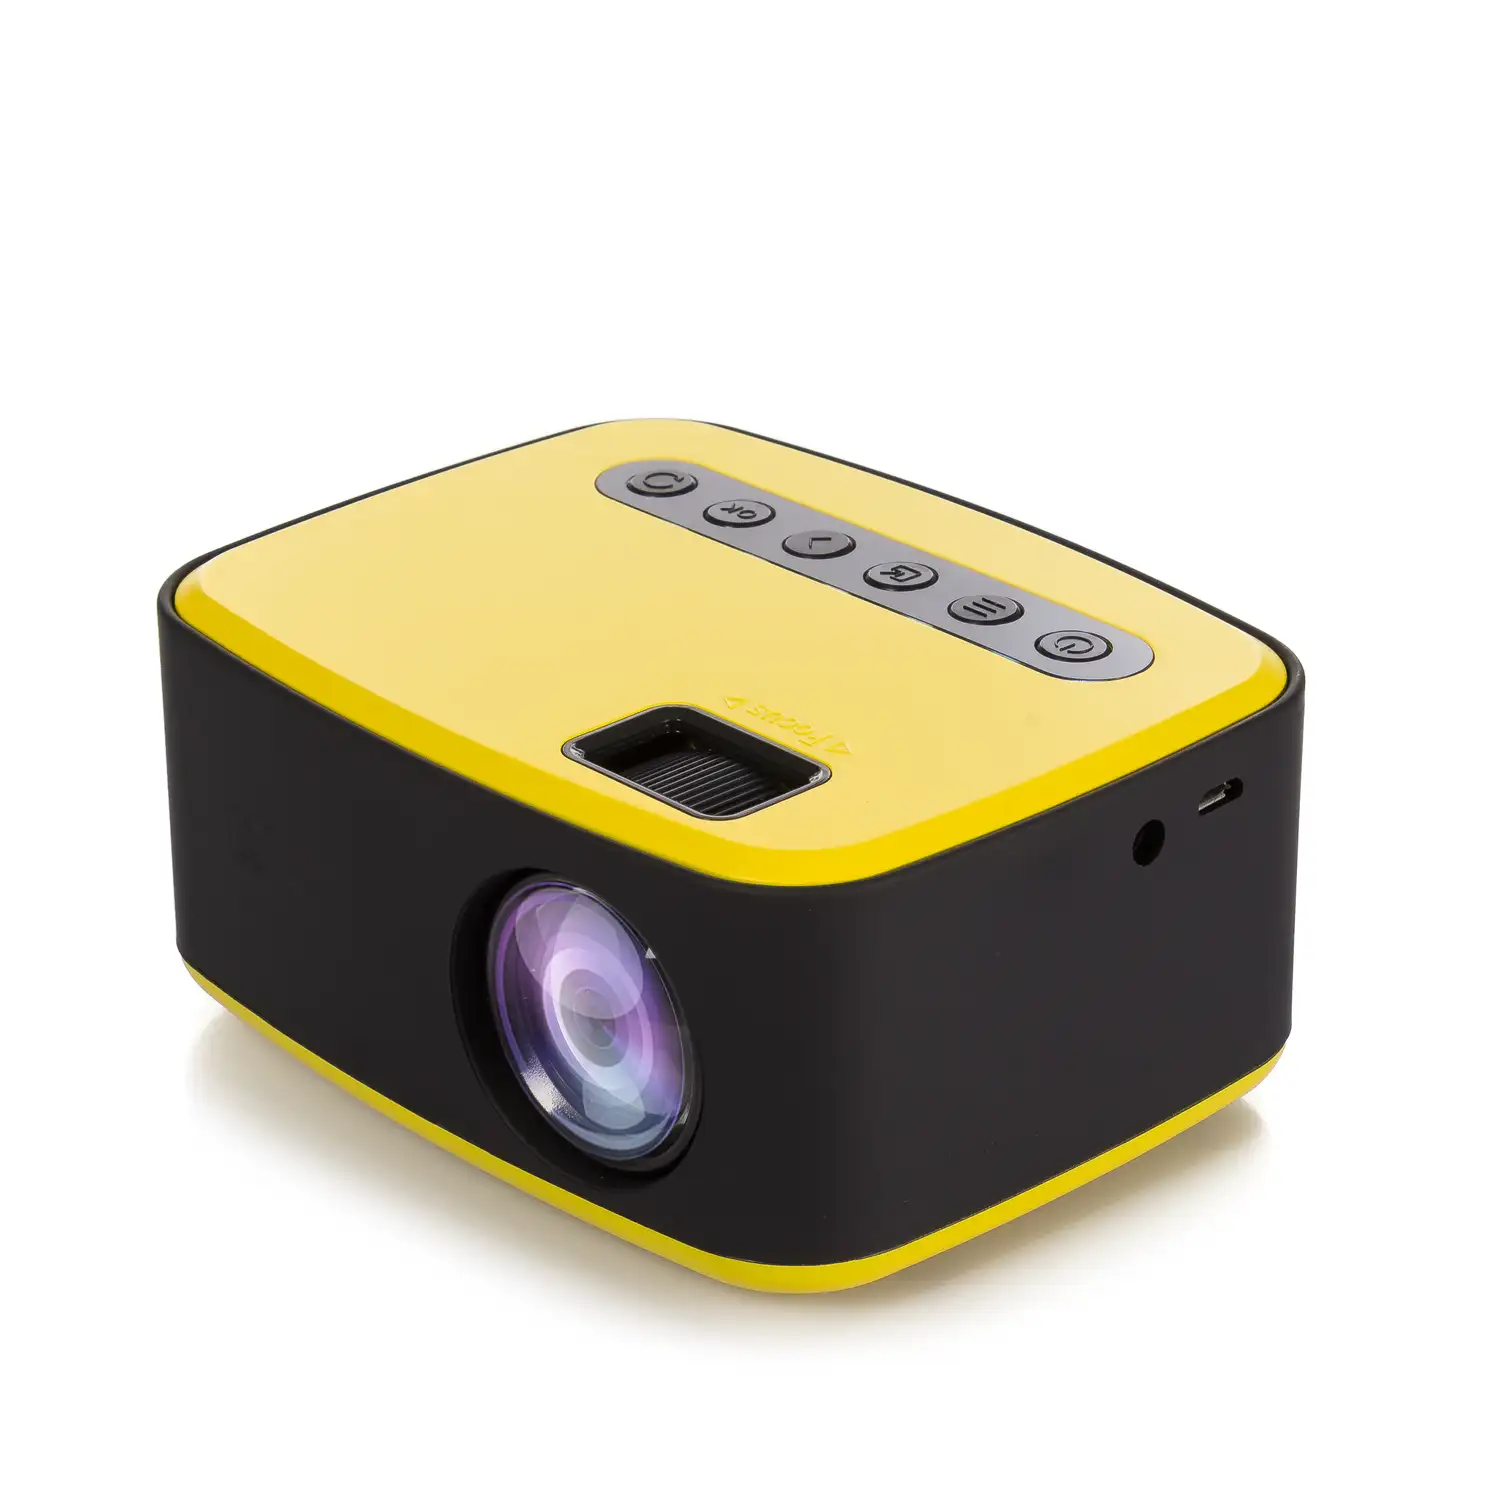 Mini video proyector T20 LED 600 lúmenes, contraste 800:1. De 16 a 100 pulgadas. Soporta resolución HD1080P. Mando a distancia.